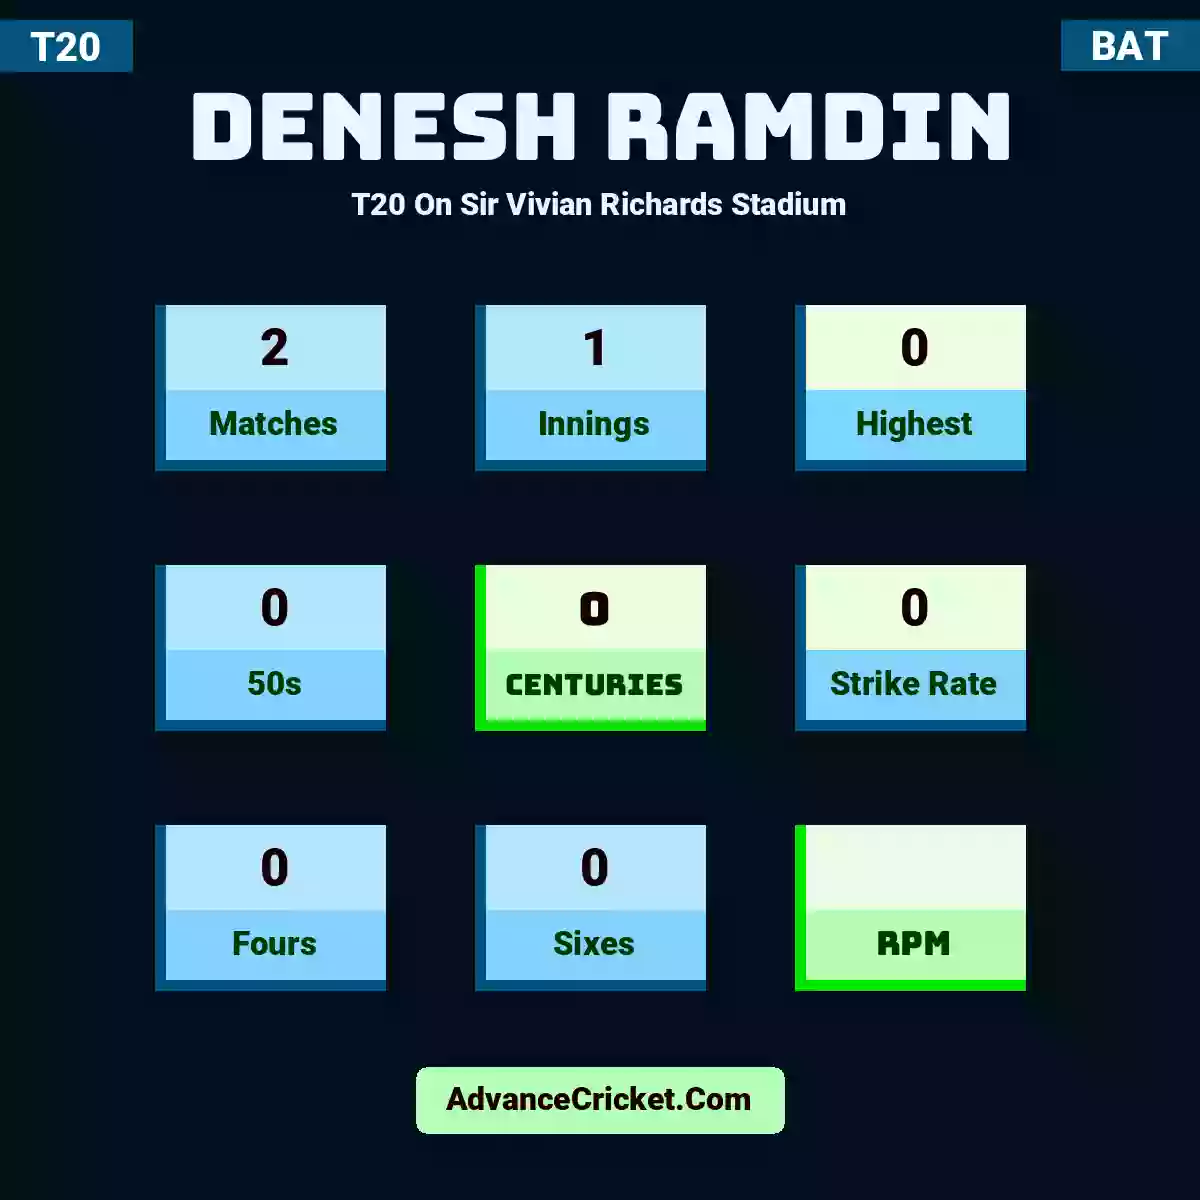 Denesh Ramdin T20  On Sir Vivian Richards Stadium, Denesh Ramdin played 2 matches, scored 0 runs as highest, 0 half-centuries, and 0 centuries, with a strike rate of 0. D.Ramdin hit 0 fours and 0 sixes.